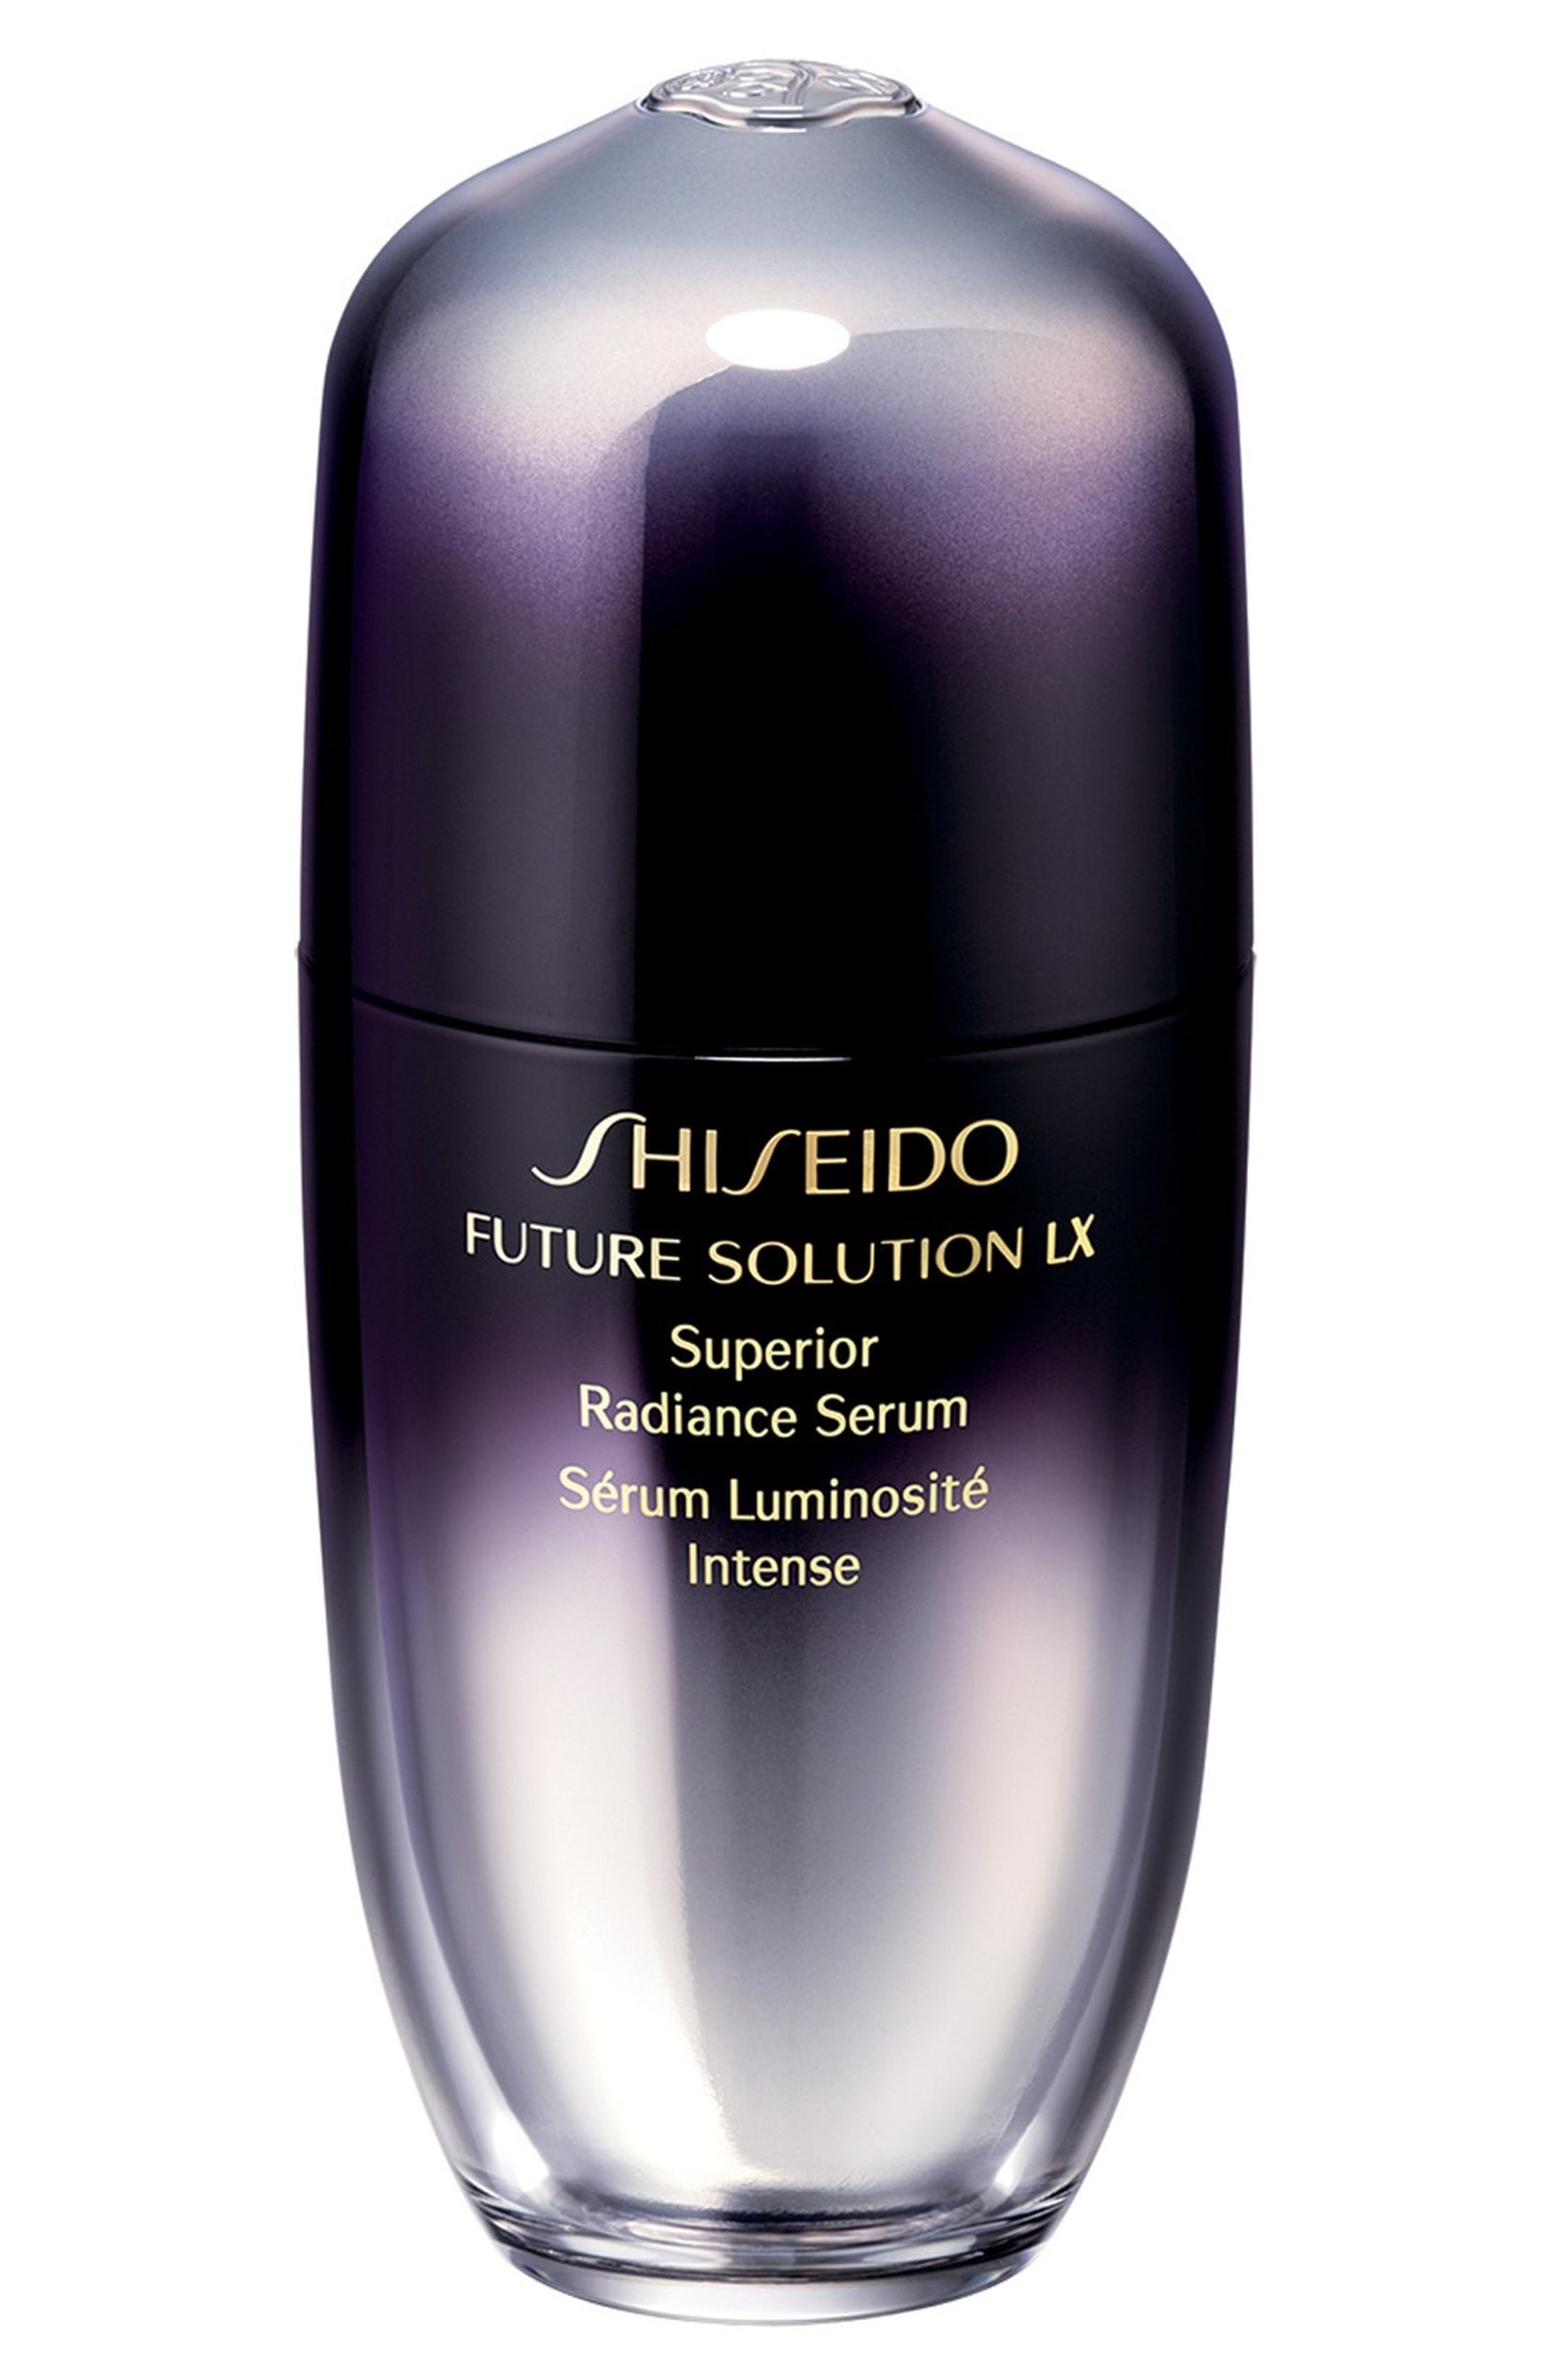 Shiseido lx. Shiseido Future solution LX Serum. Shiseido Future solution LX Intensive. Shiseido cыворотка для здорового сияния кожи Legendary Enmei Future solution LX. Shiseido Future solution LX оттенки.